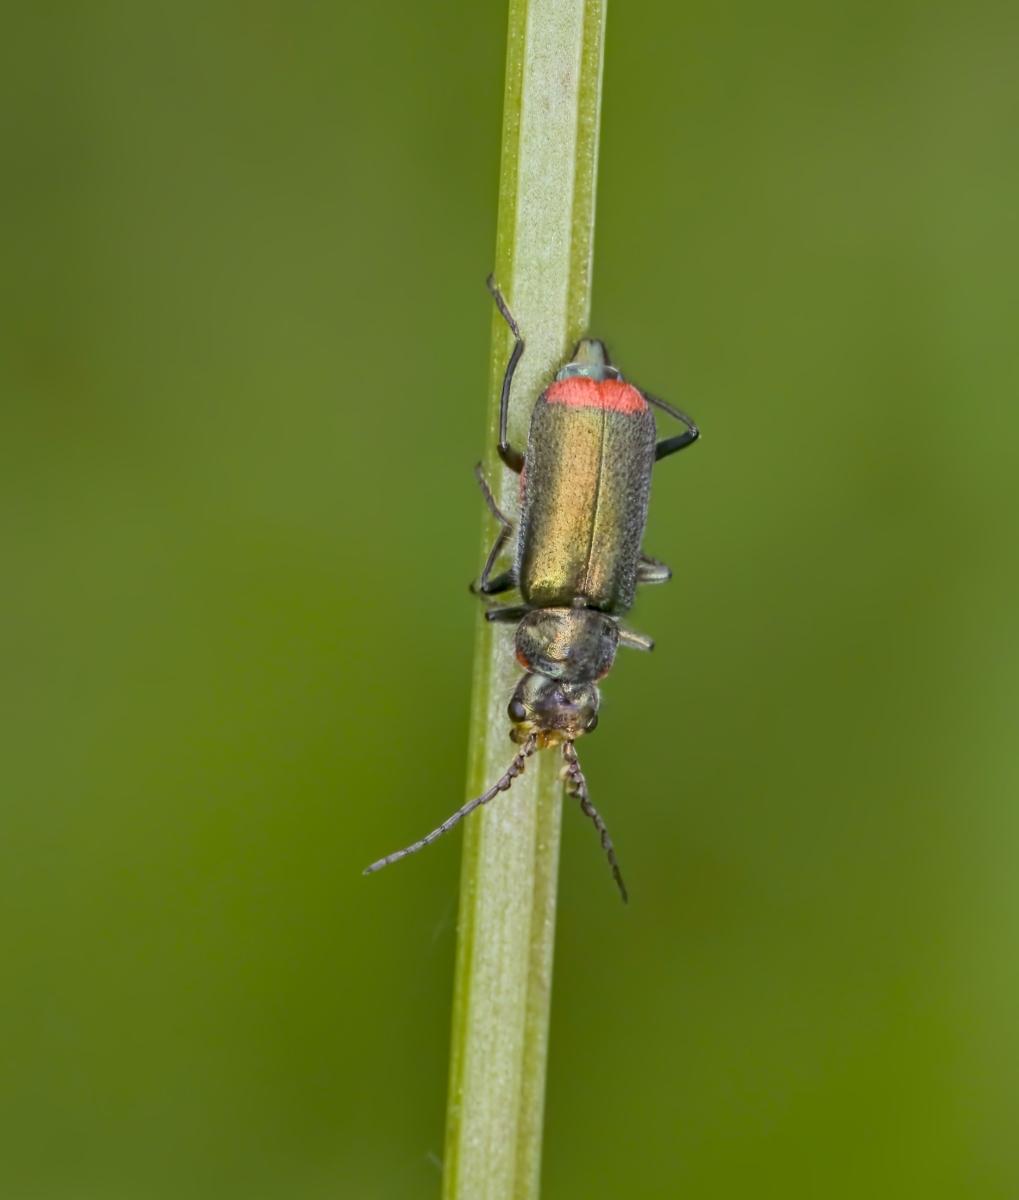 Common Malachite Beetle. Malachius bipustulatus. Credit David Belton 2022